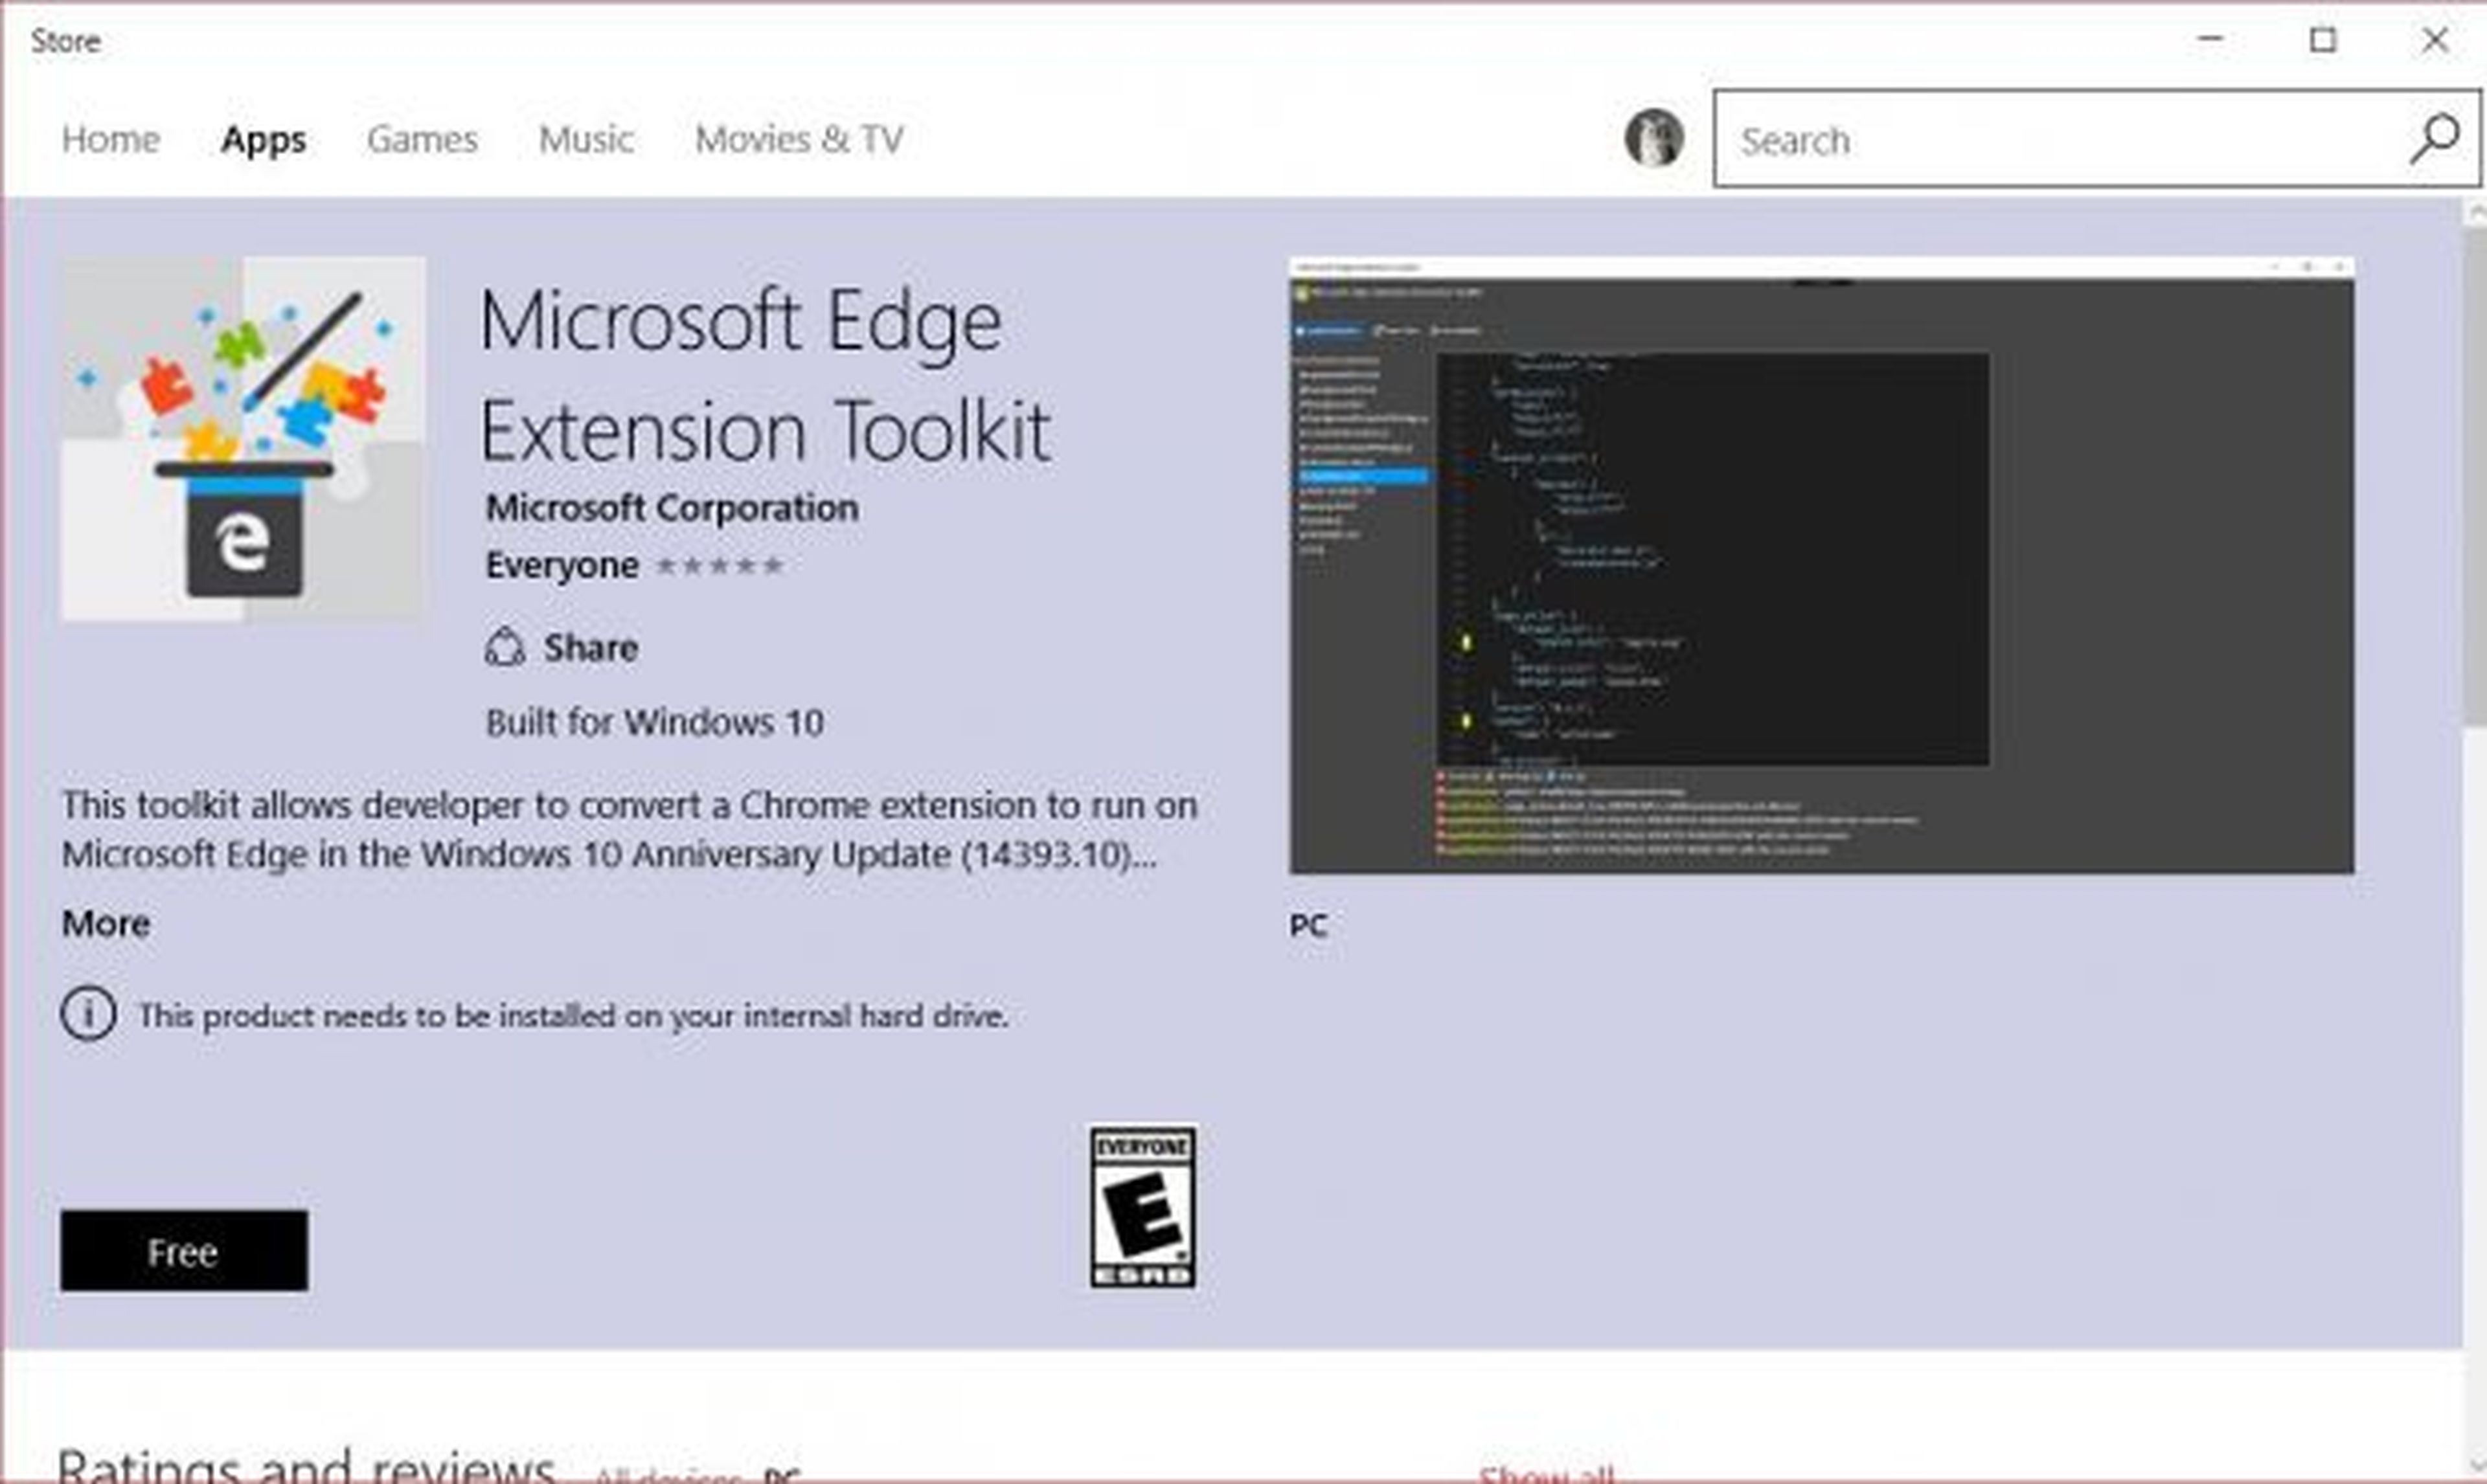 Microsoft edge extension toolkit